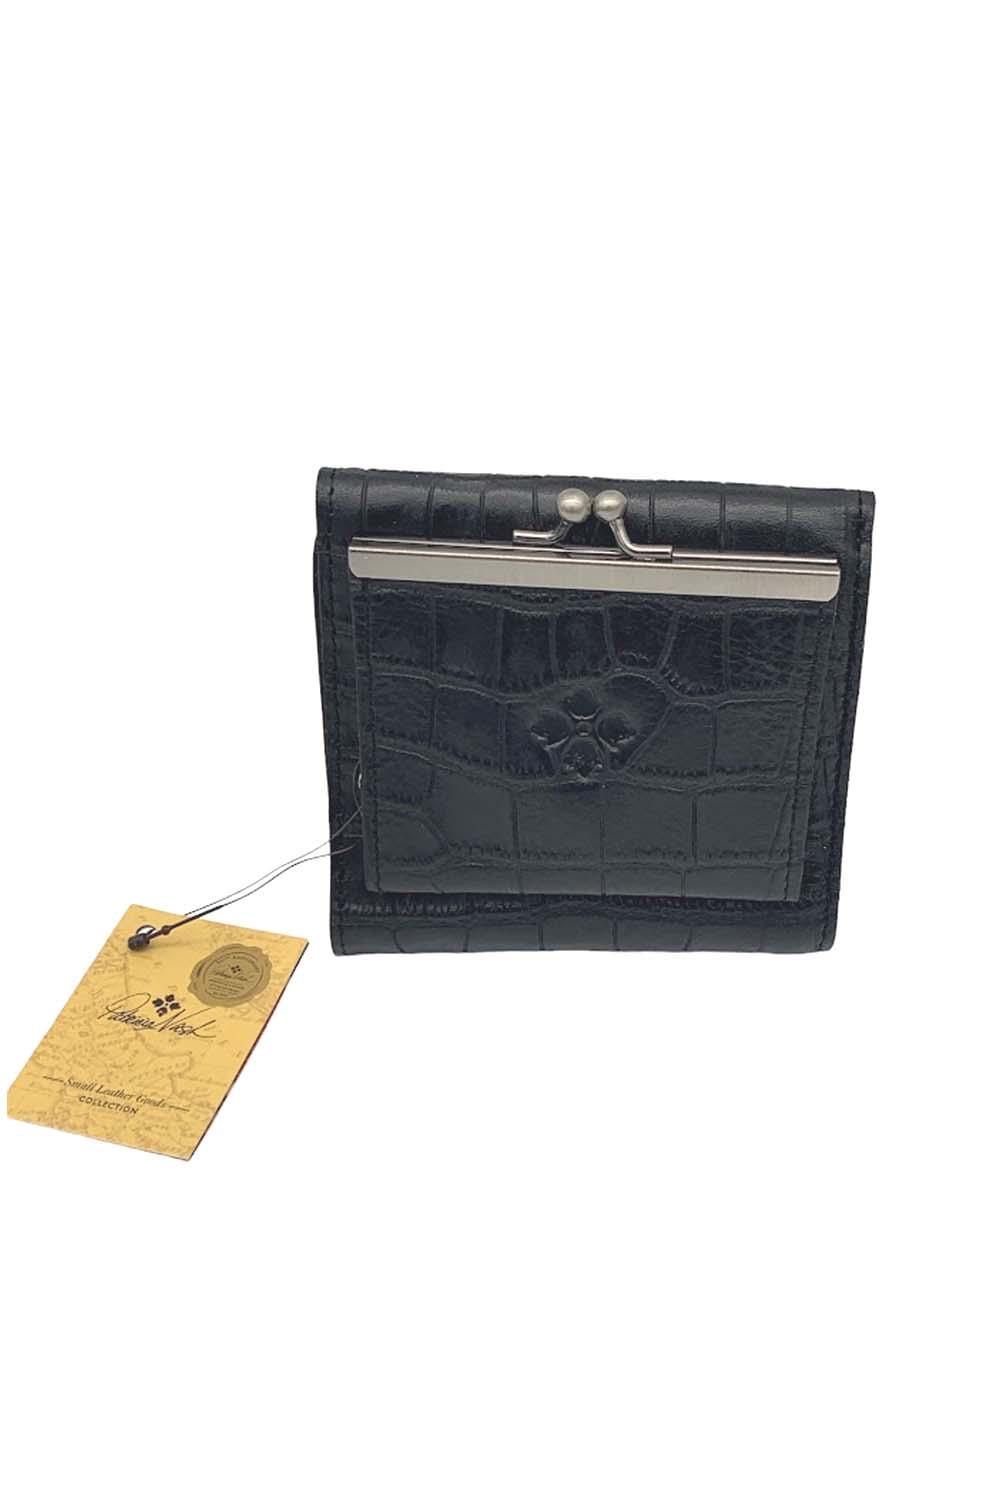 Patricia Nash Leather Reiti Bi-Fold Wallet Plum